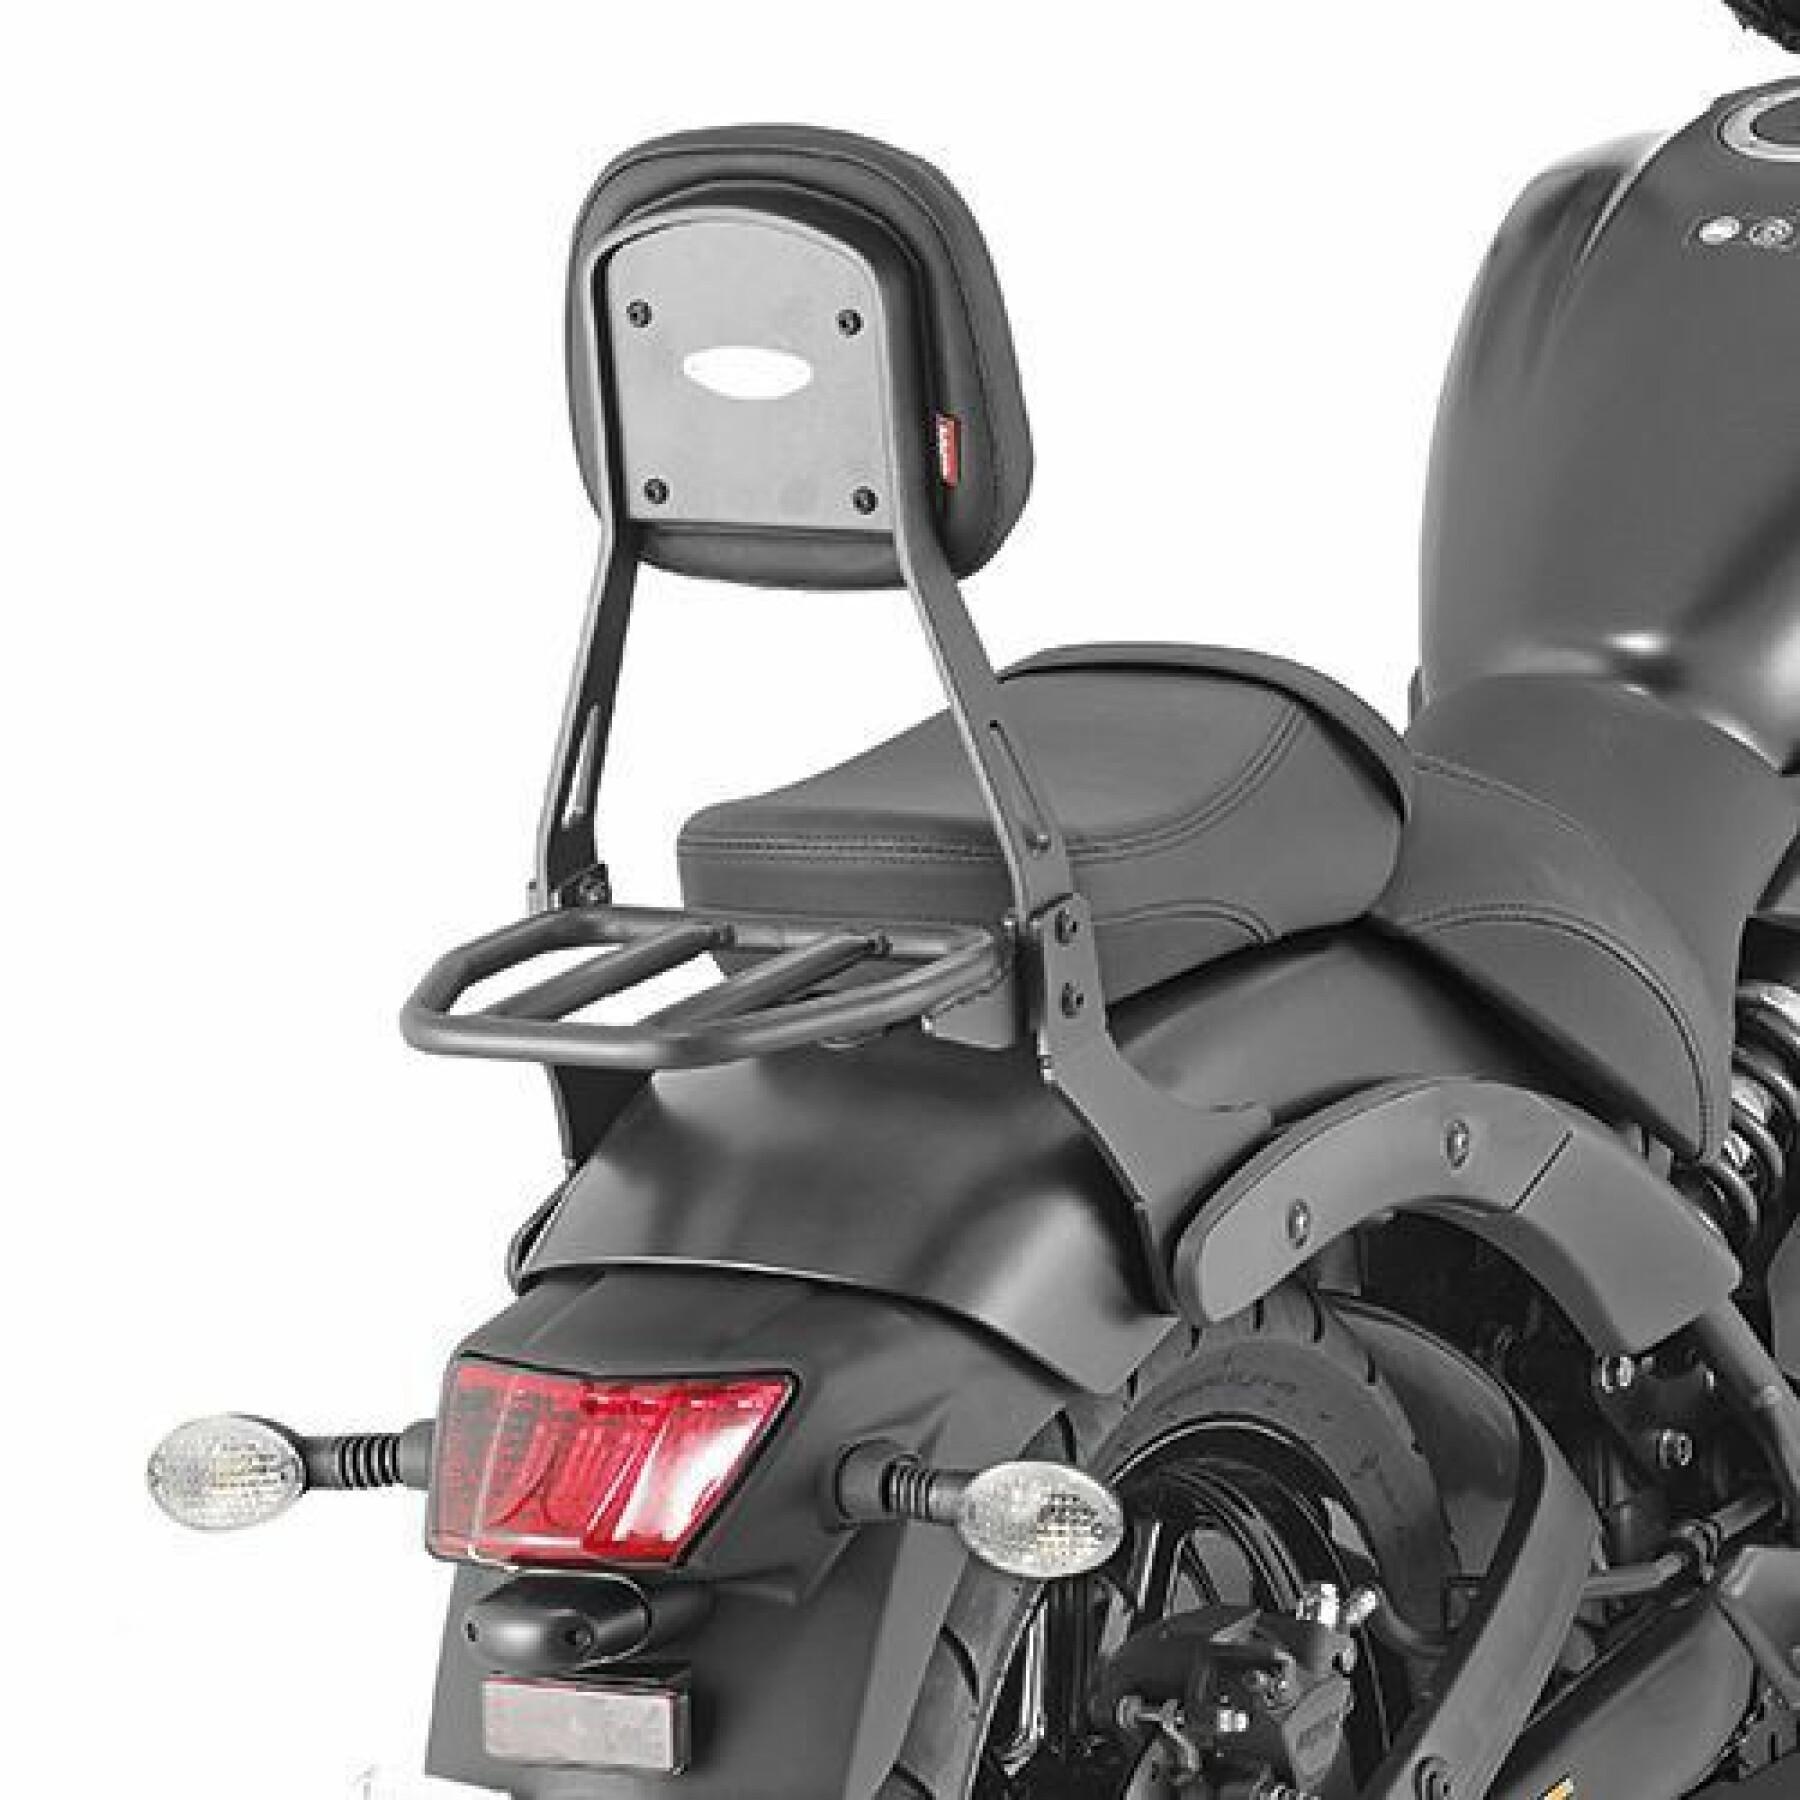 Respaldo moto top case sissybar Givi keeway superlight1252020